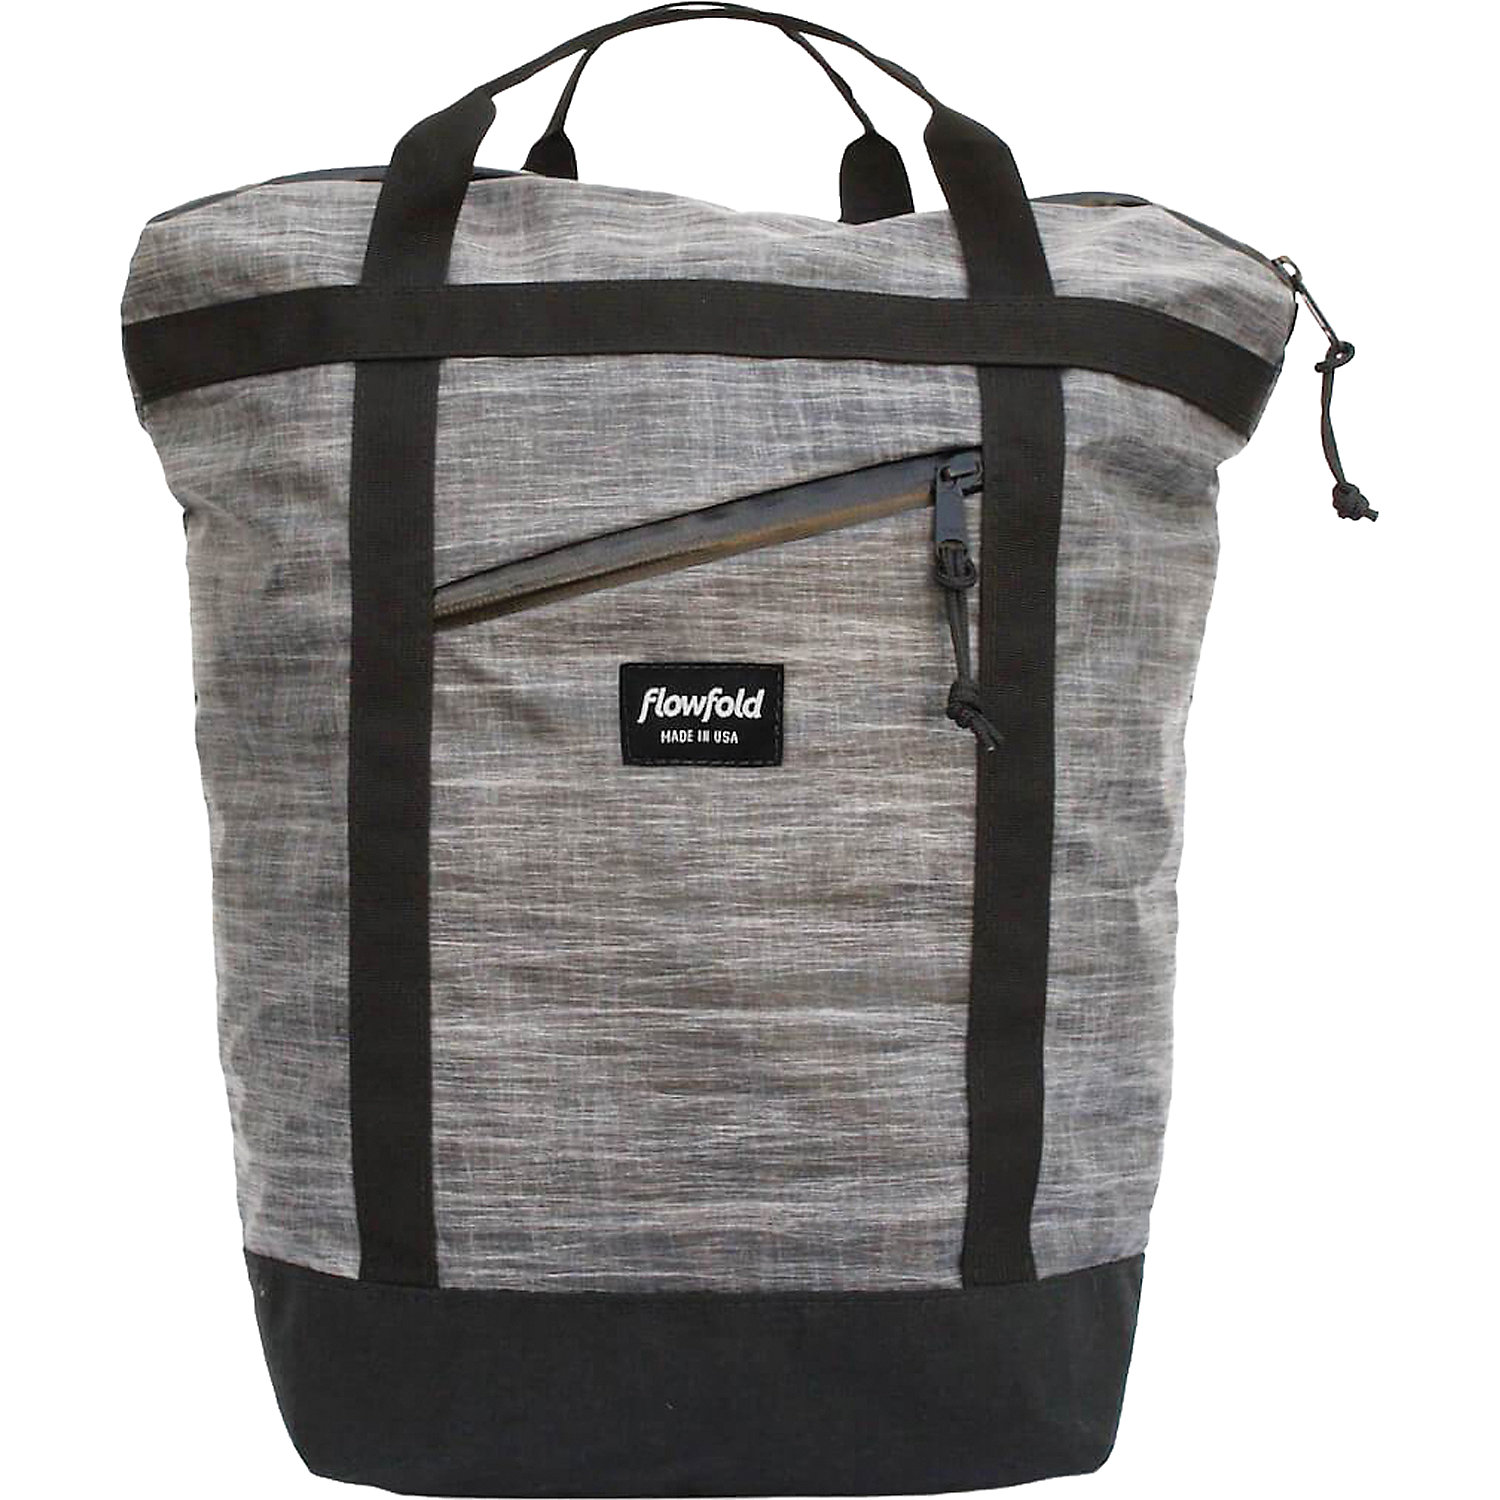 Flowfold Denizen Limited Tote Backpack